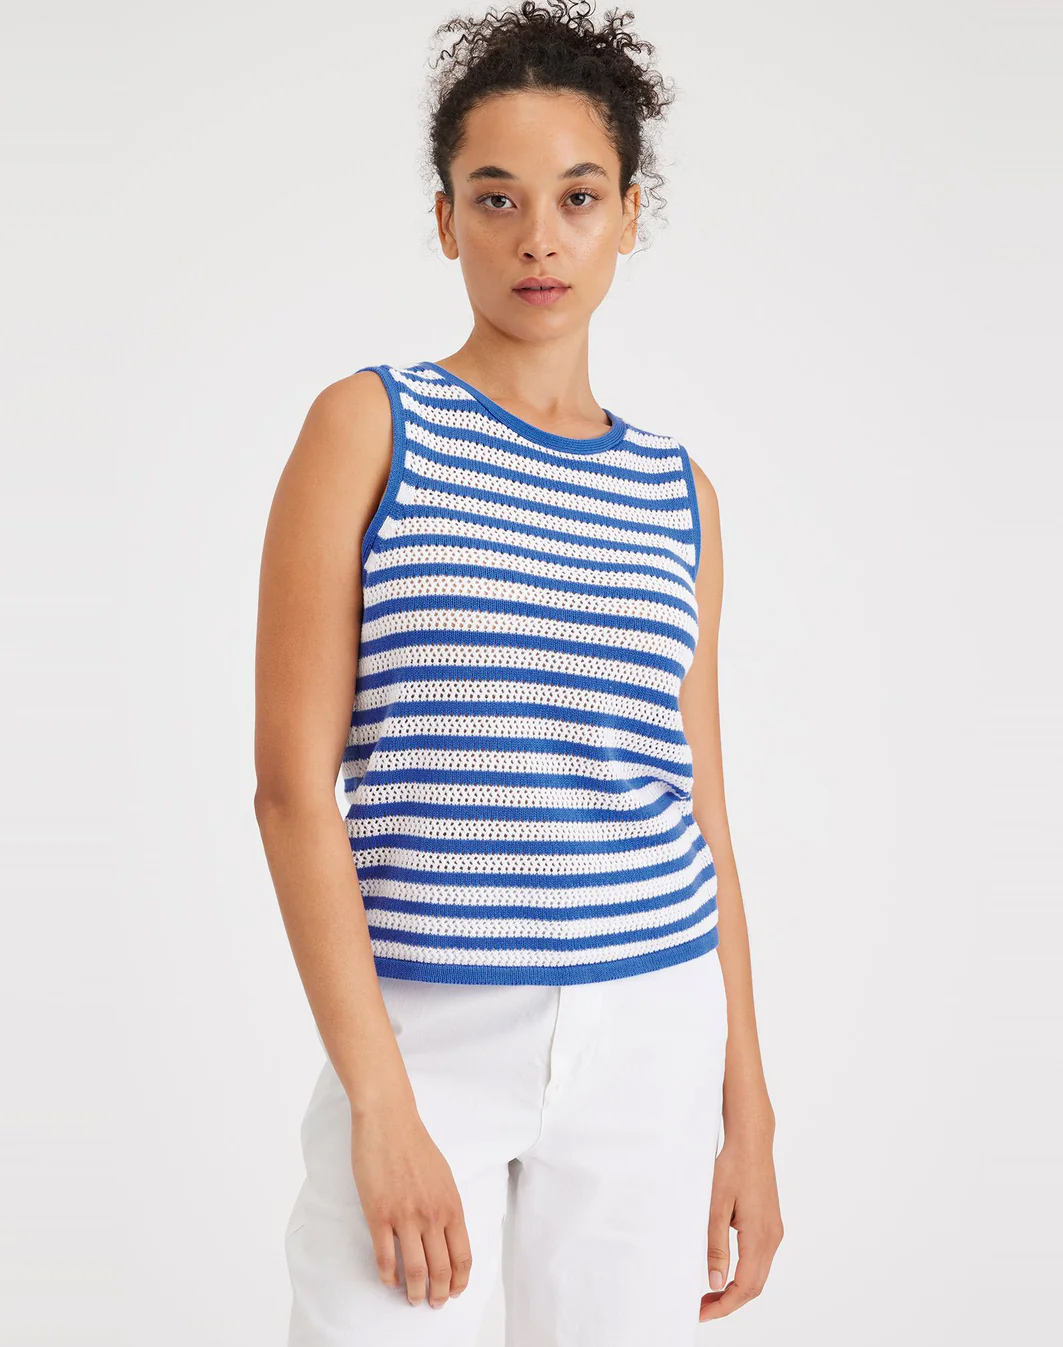 Dockers camiseta de mujer sin mangas A6985-0002 blanca con rayas azules